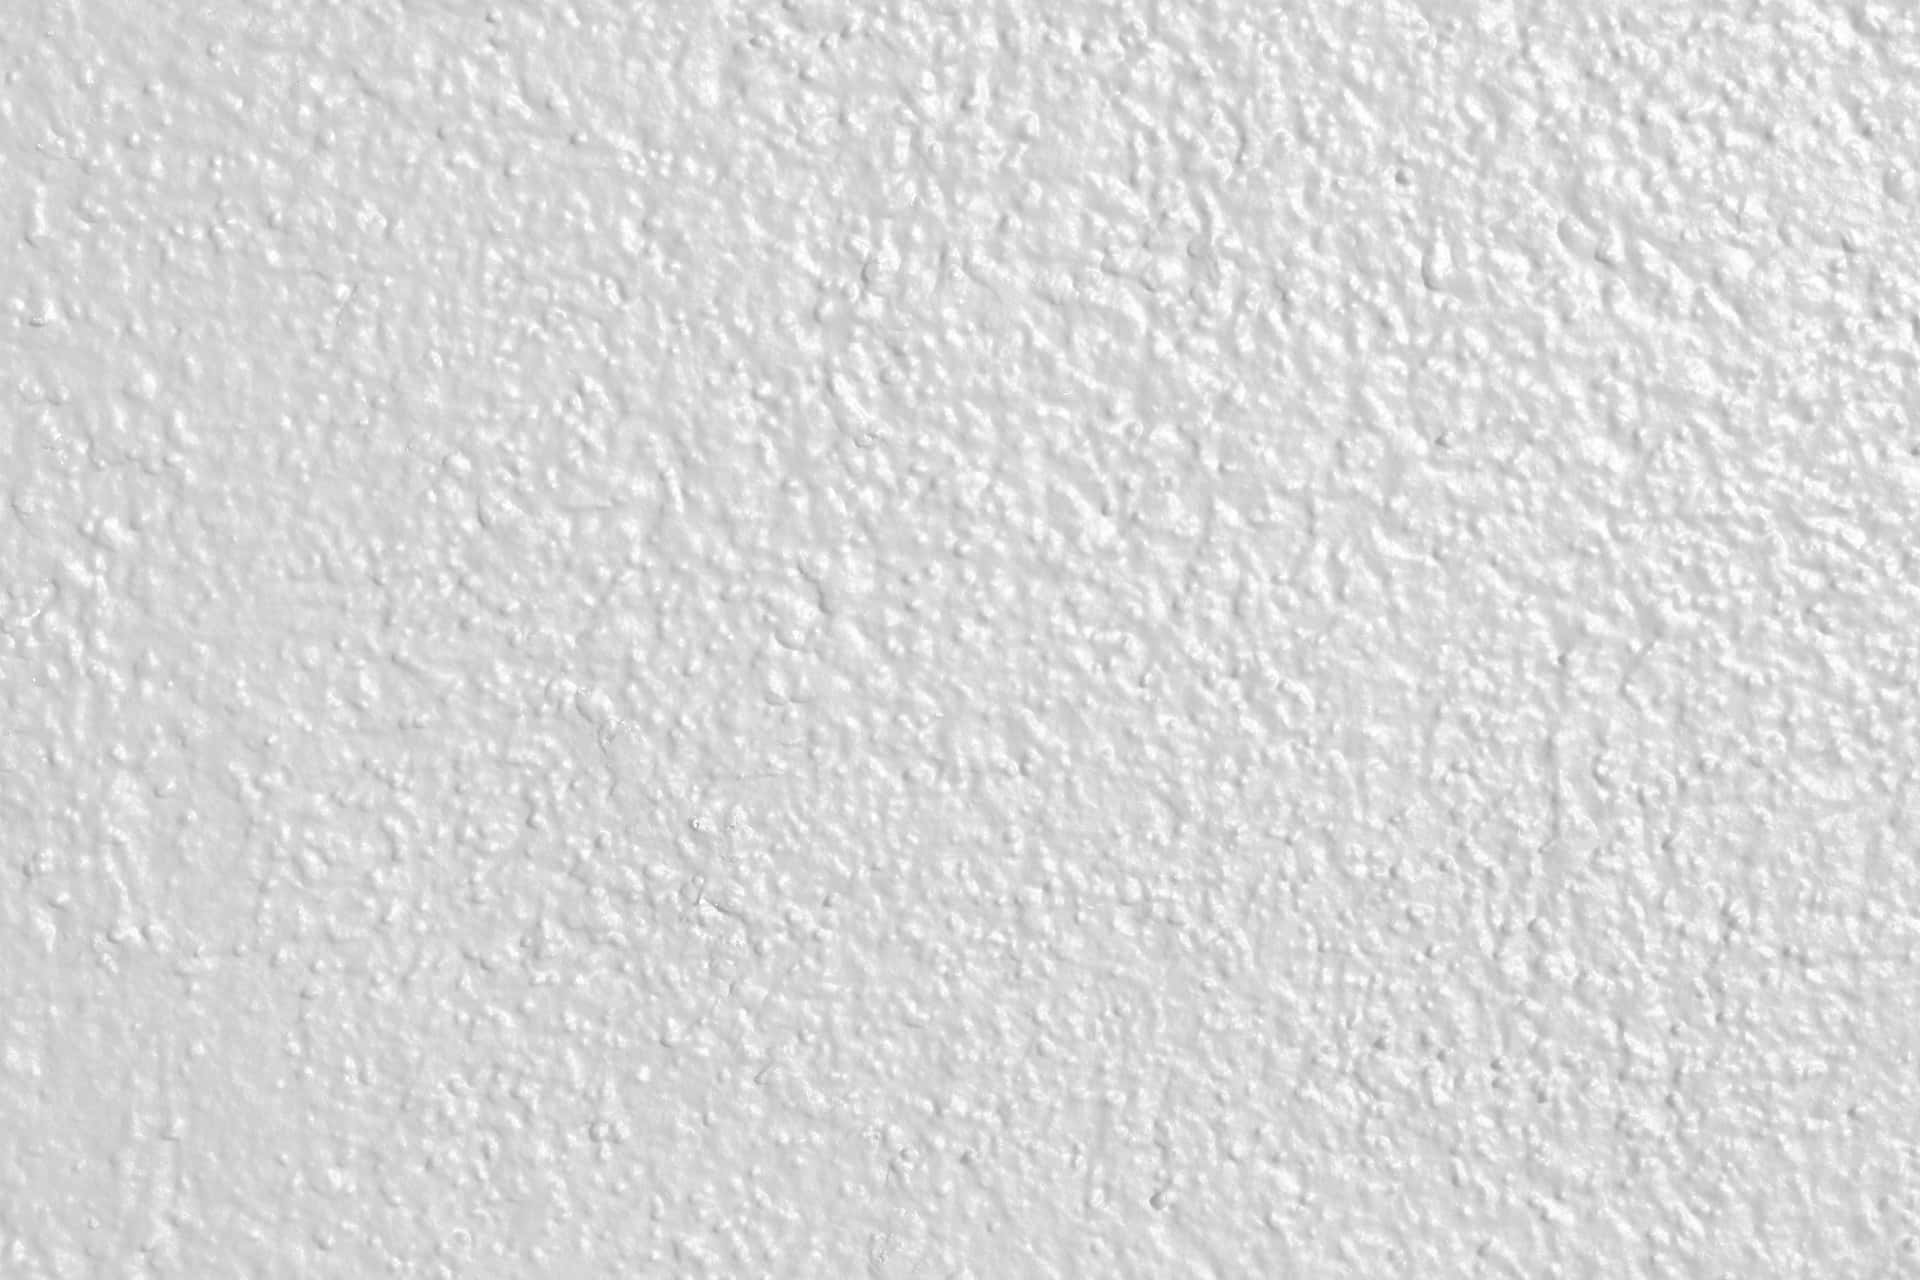 "White Brick Wall Detail Close-up"